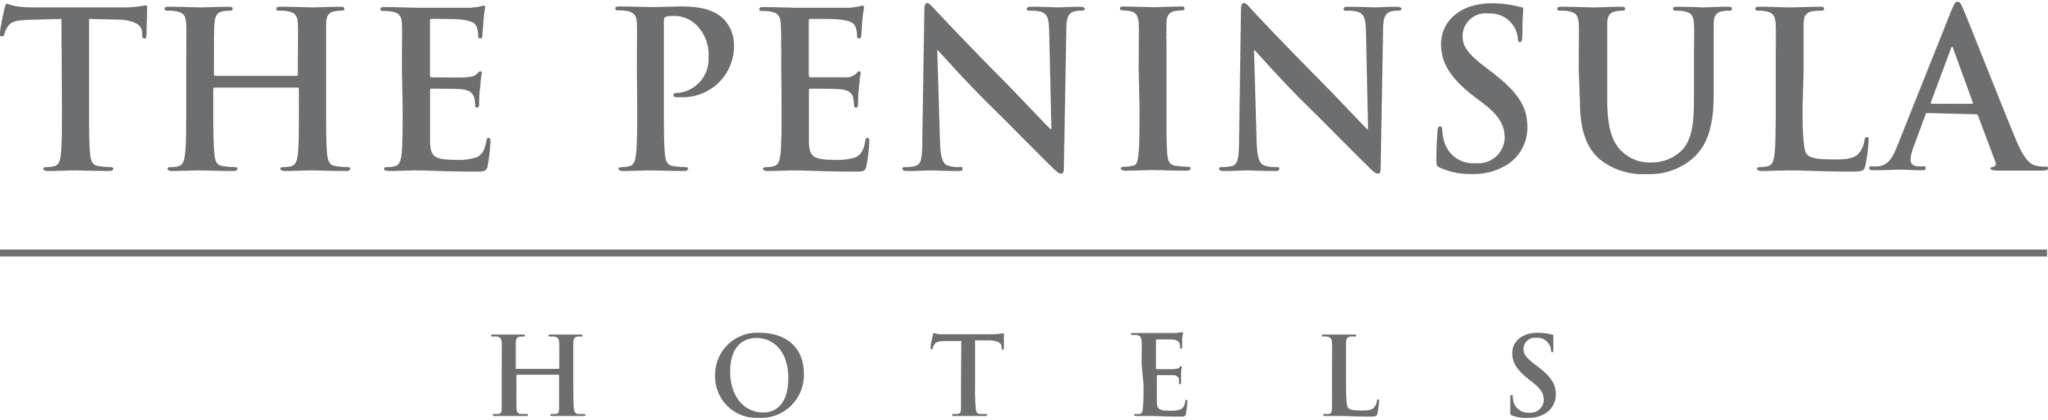 Das Logo der Peninsula Hotels